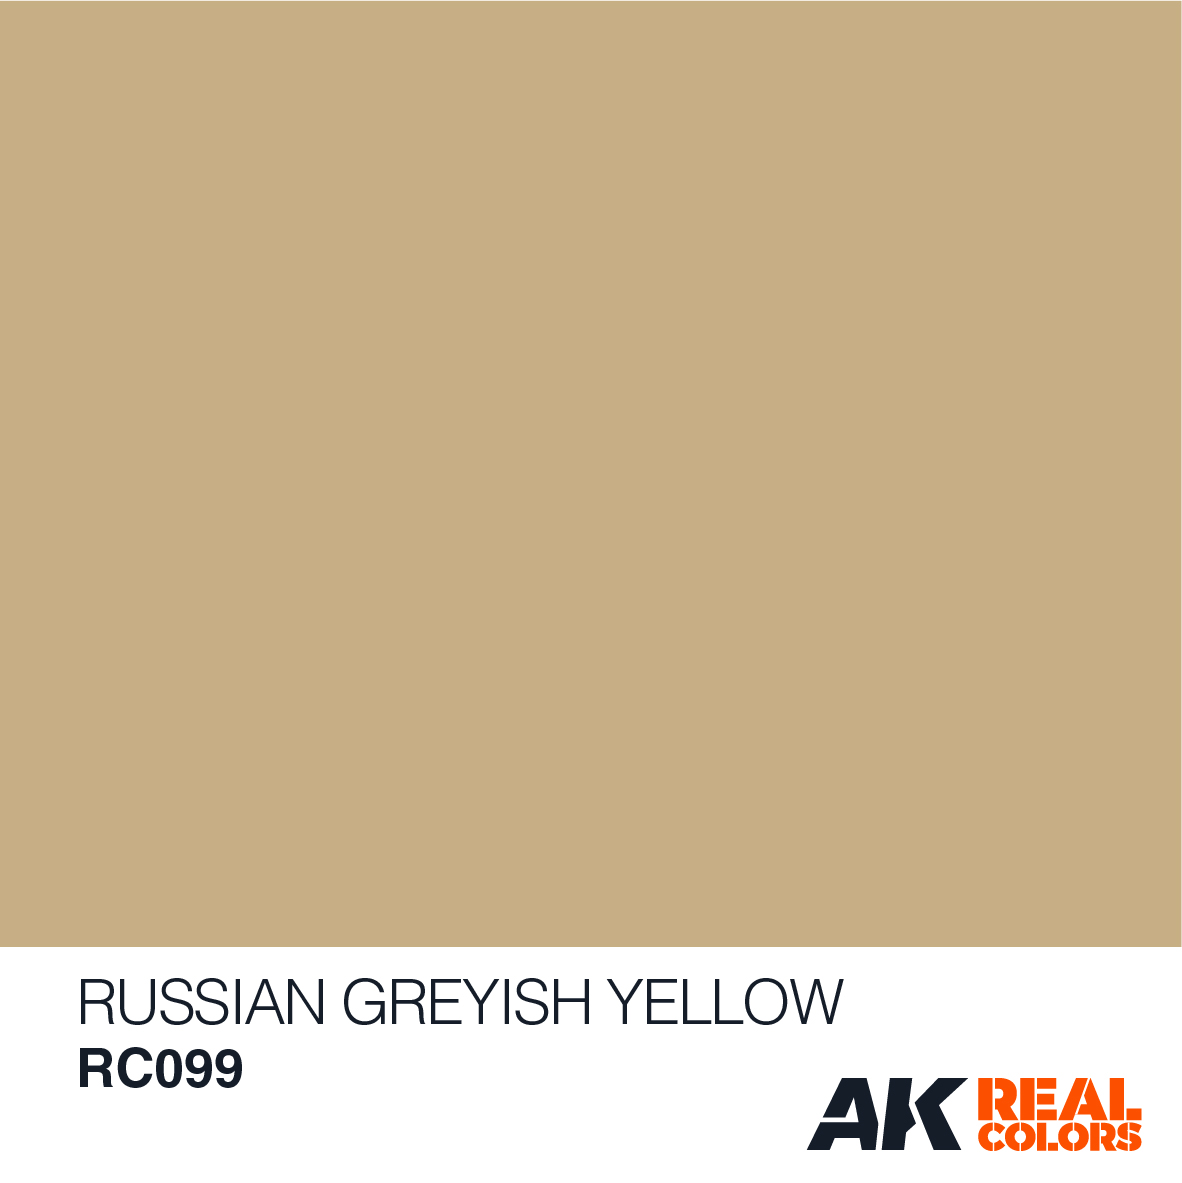 Russian Greyish Yellow